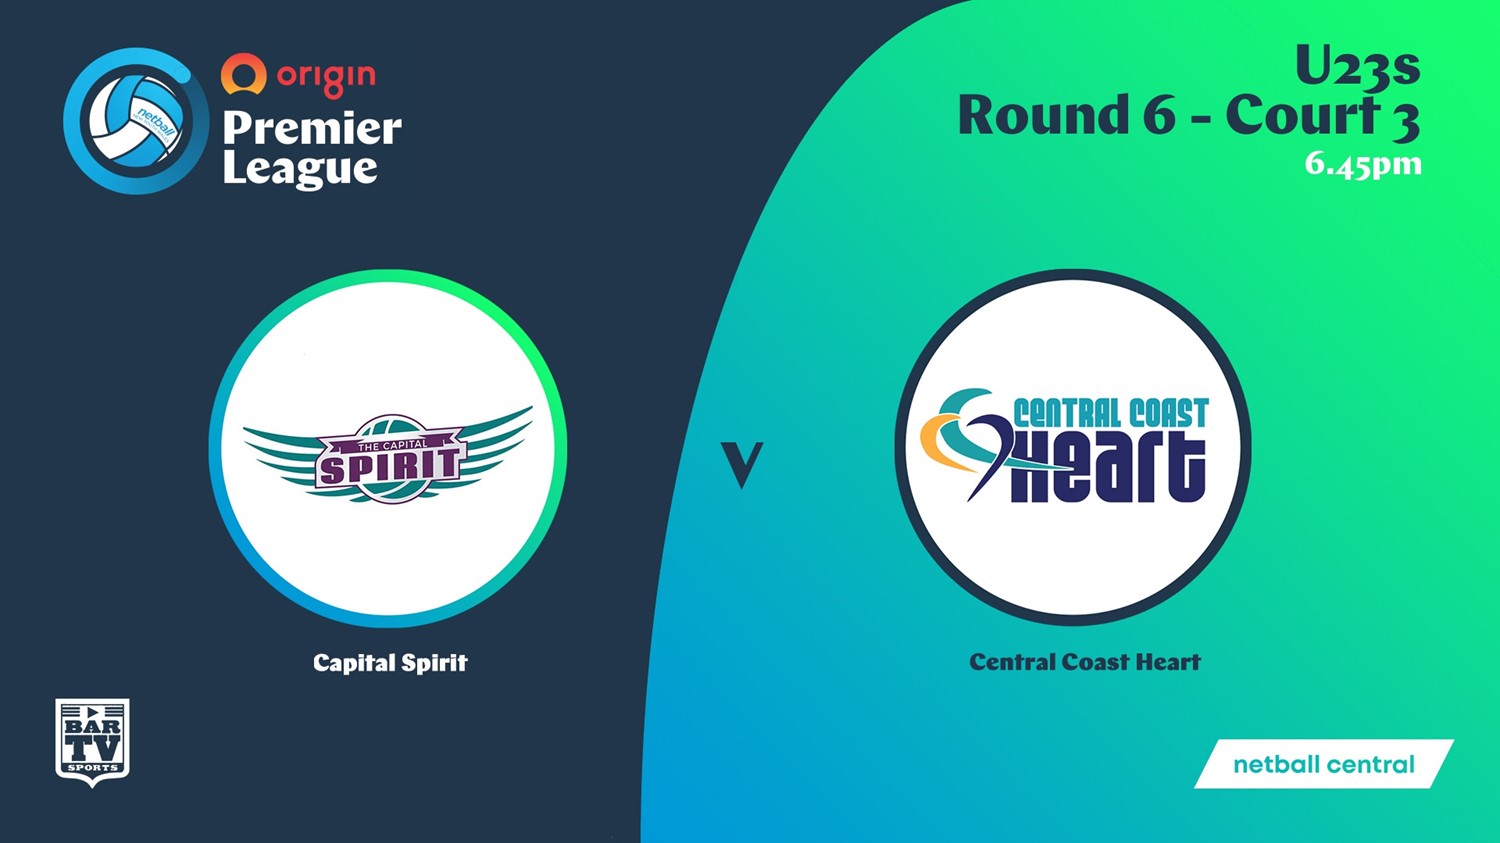 NSW Prem League Round 6 - Court 3 - U23s - Capital Spirit v Central Coast Heart Slate Image